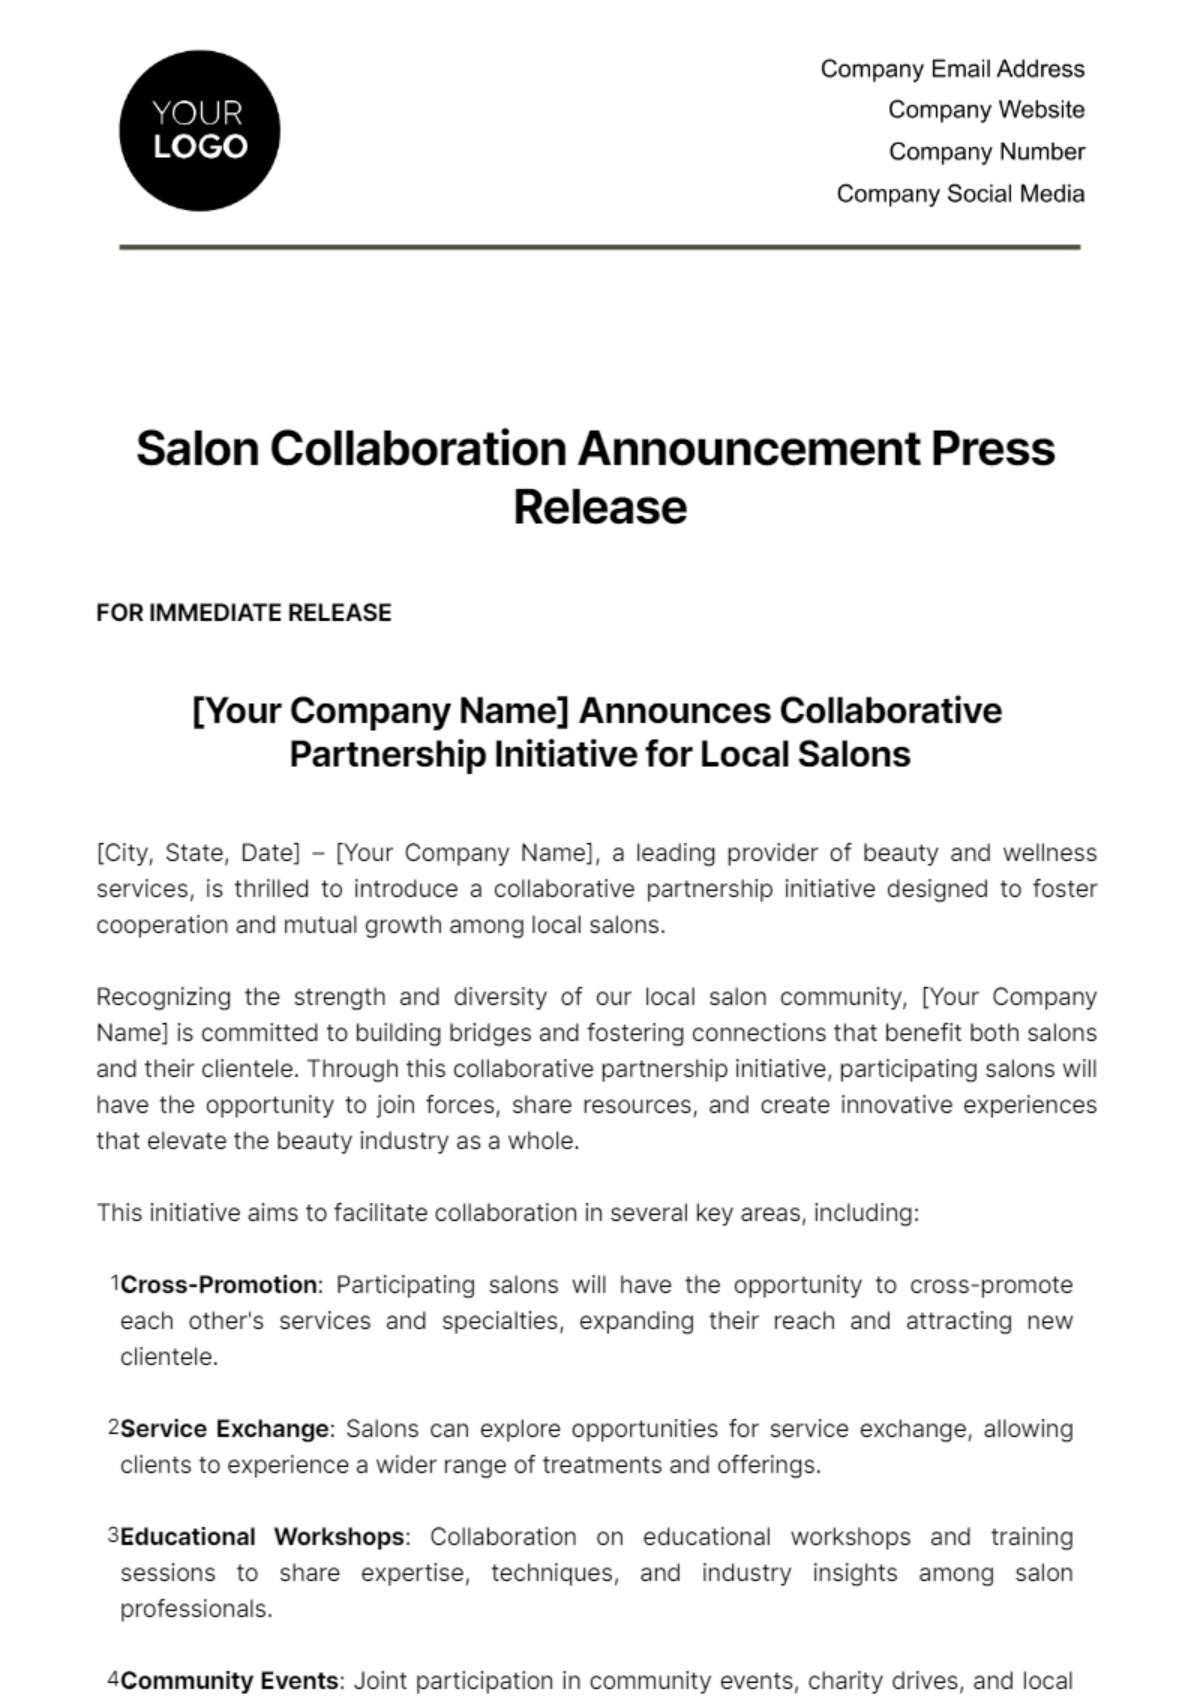 Salon Collaboration Announcement Press Release Template